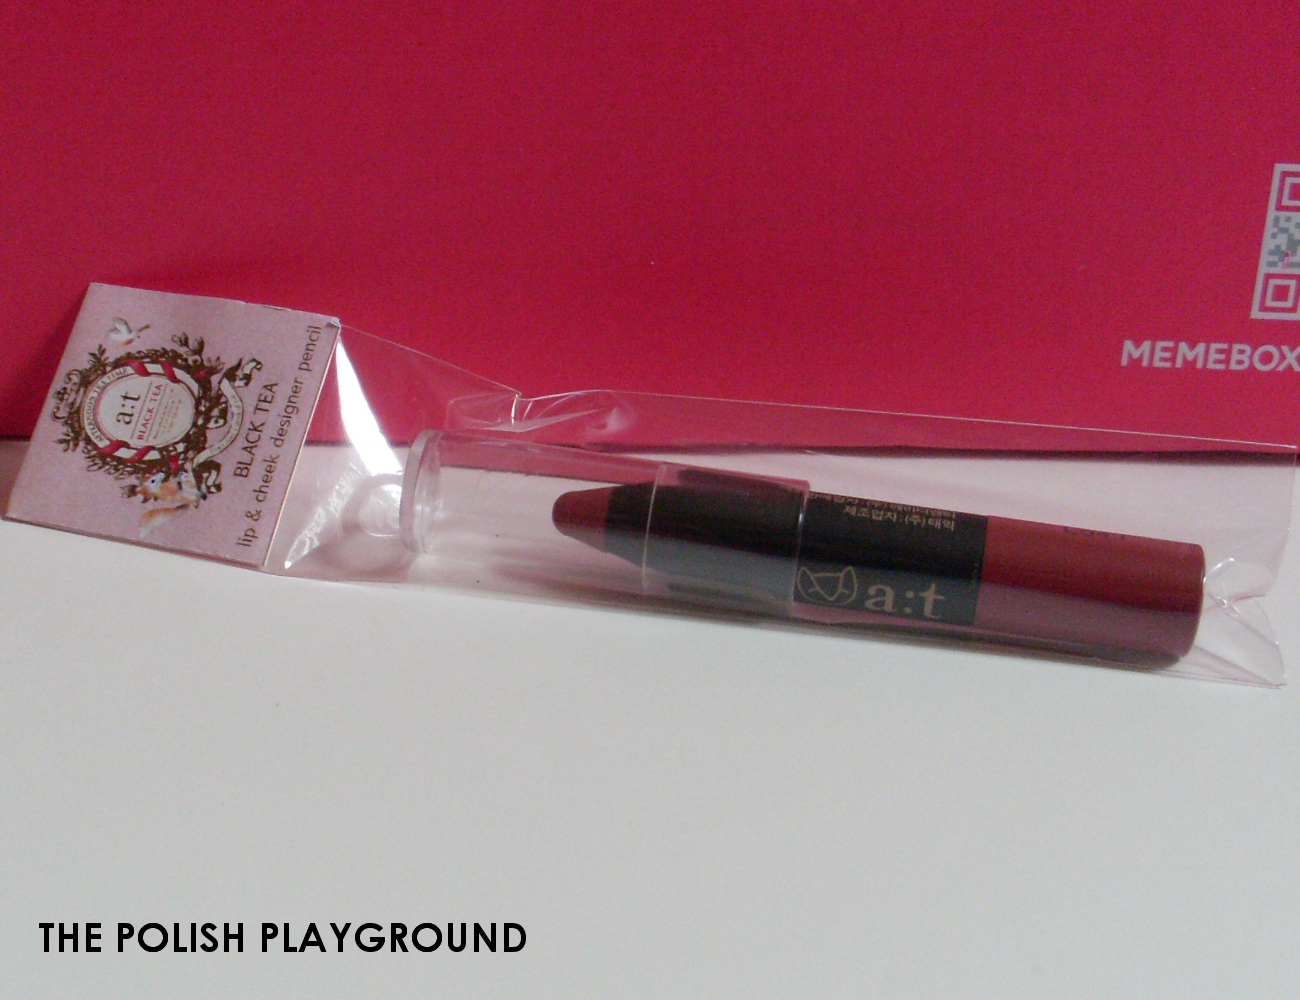 Memebox Global #14 Unboxing - a;t fox Fantasy Holic Lip & Cheek Designer Pencil in 03 Rose Beige